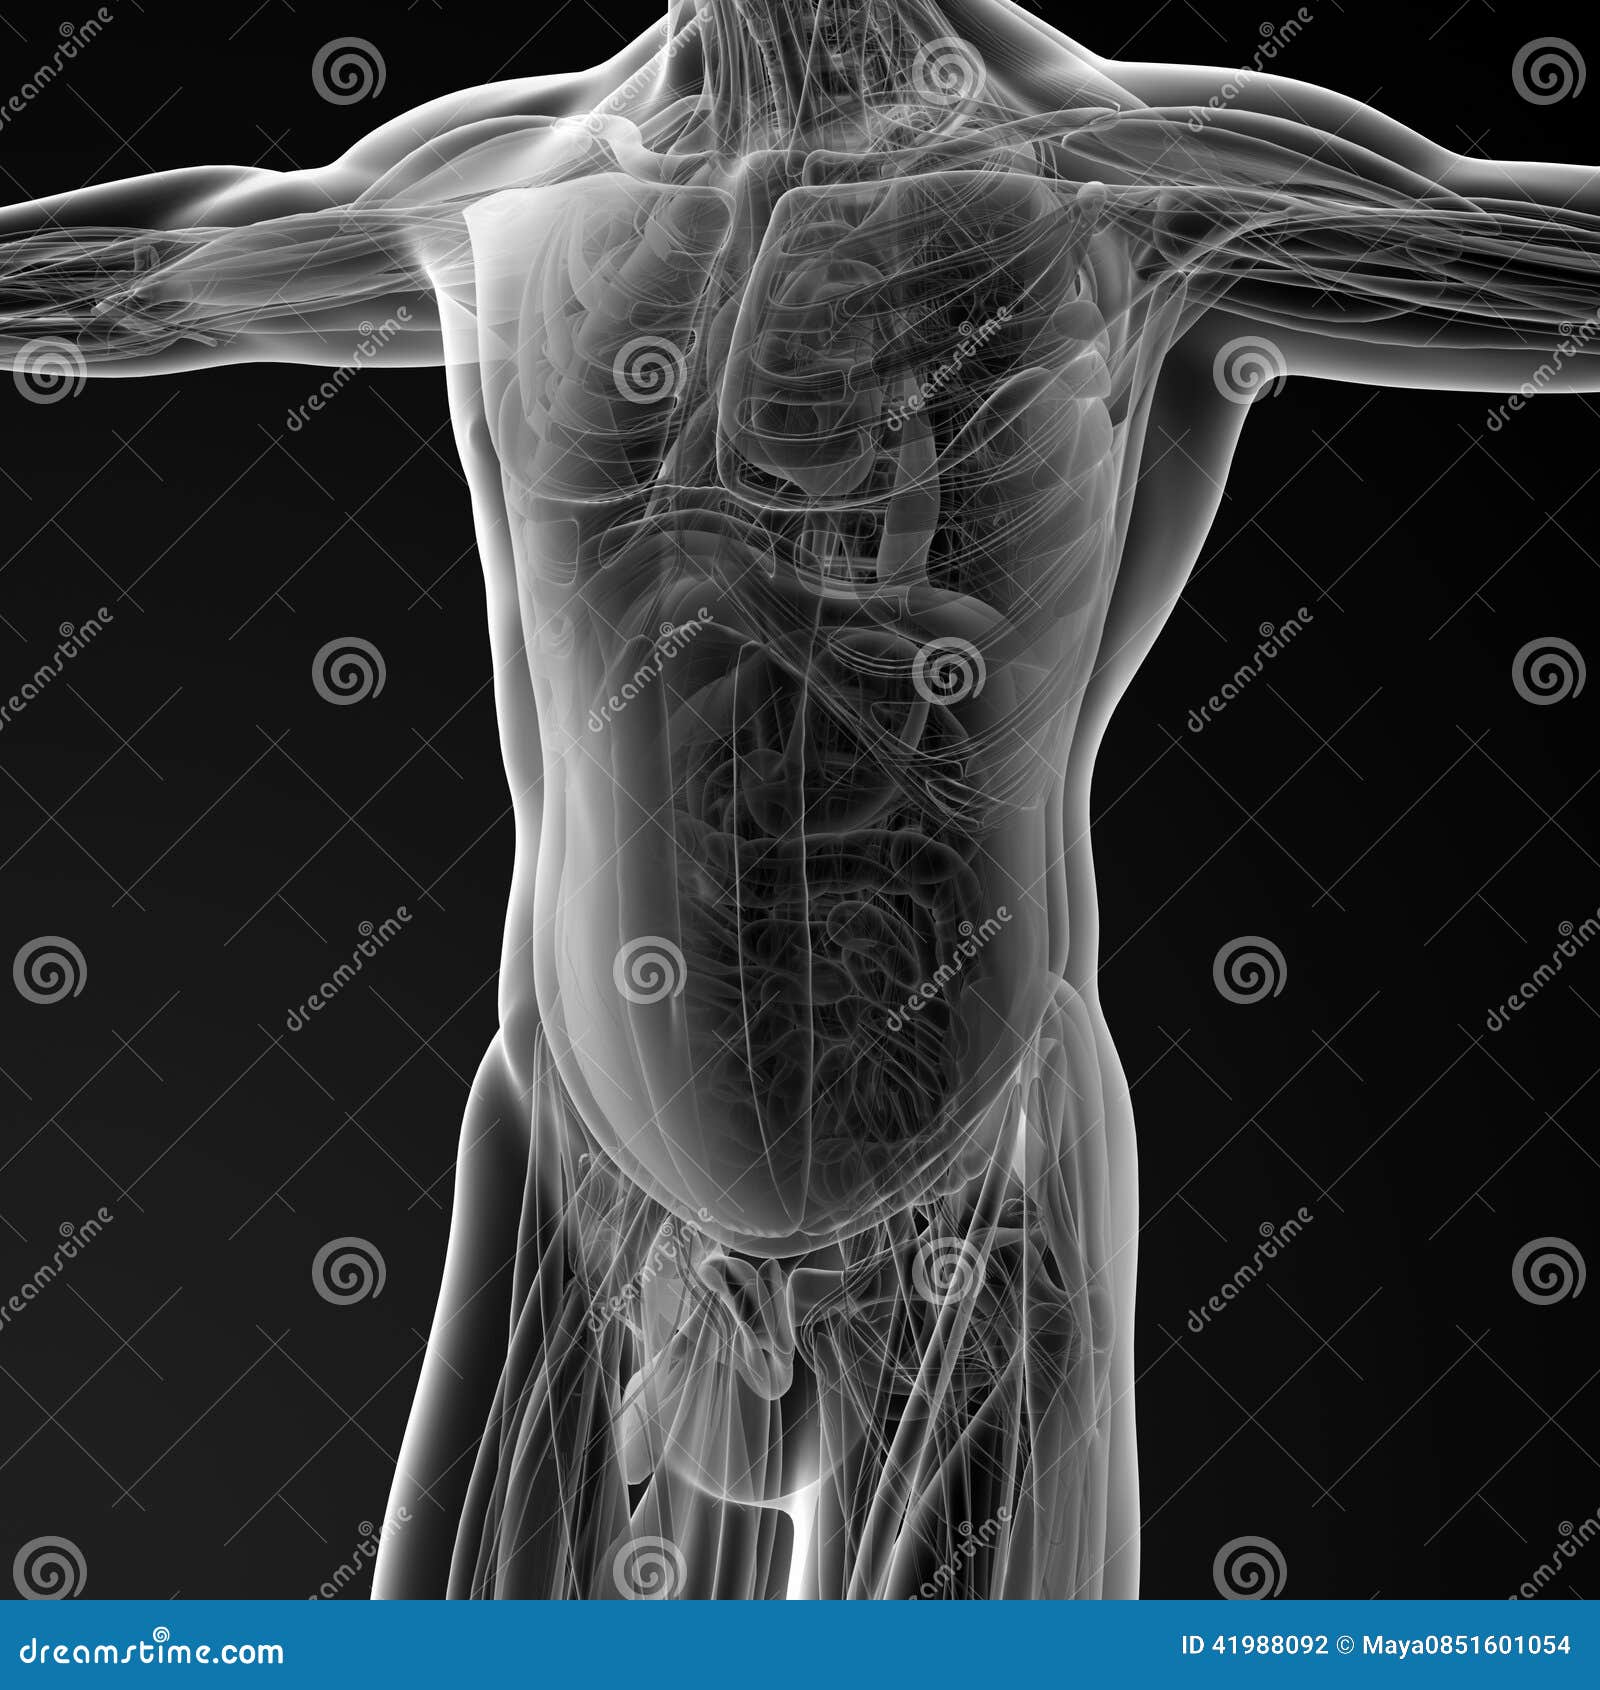 Male anatomy stock illustration. Illustration of graphic - 41988092